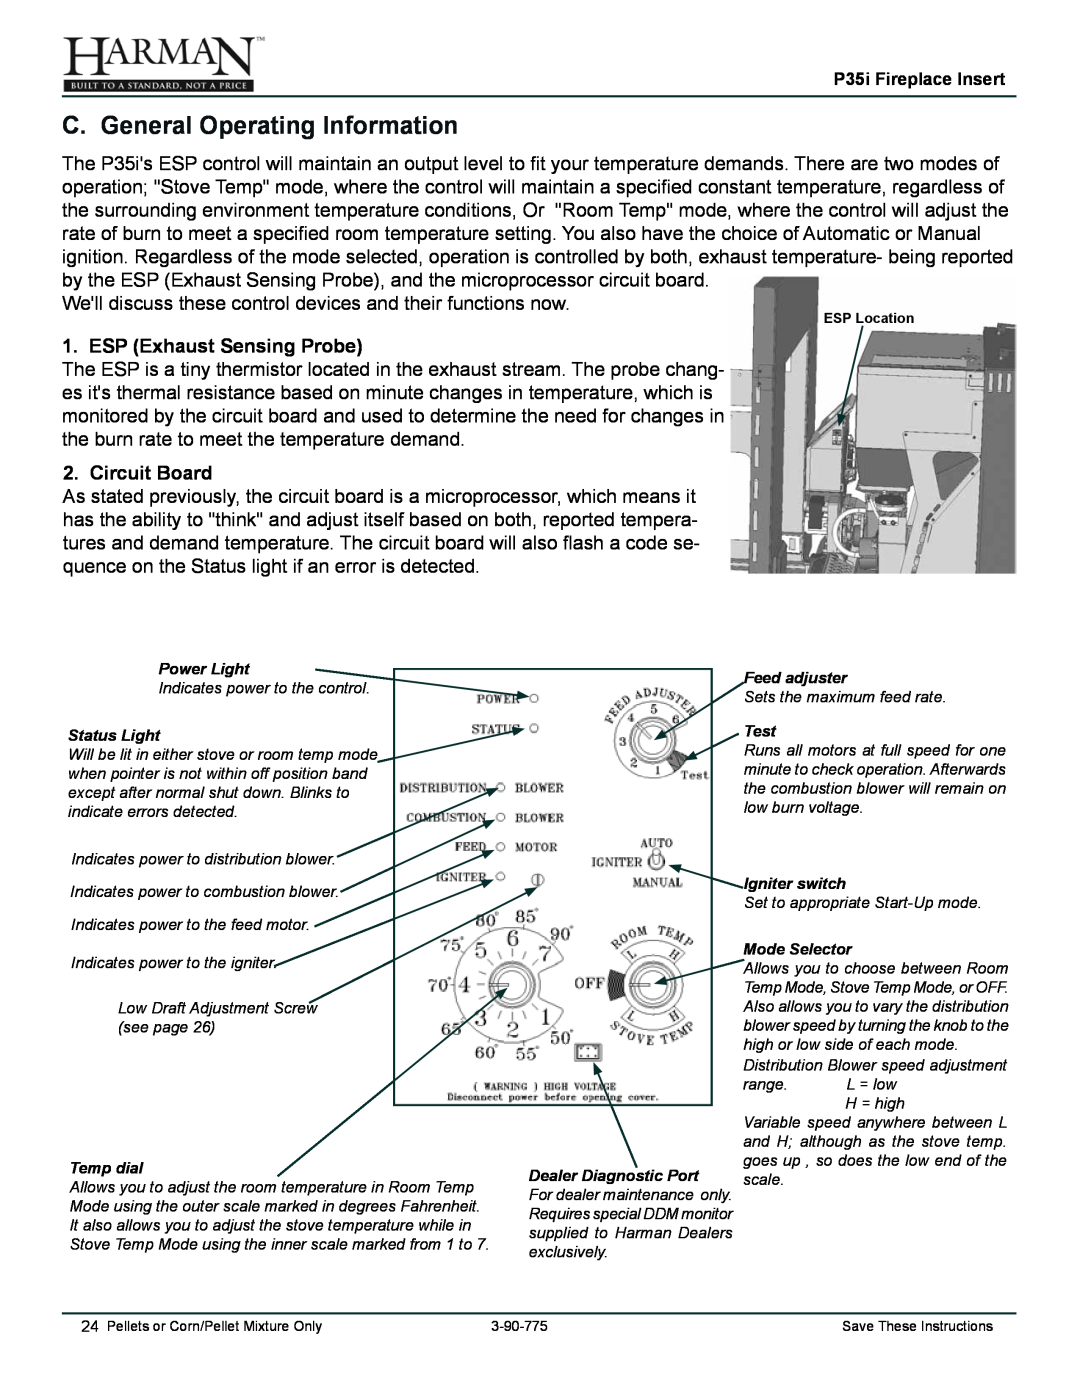 Harman Stove Company P35I owner manual C. General Operating Information, ESP Exhaust Sensing Probe, Circuit Board 